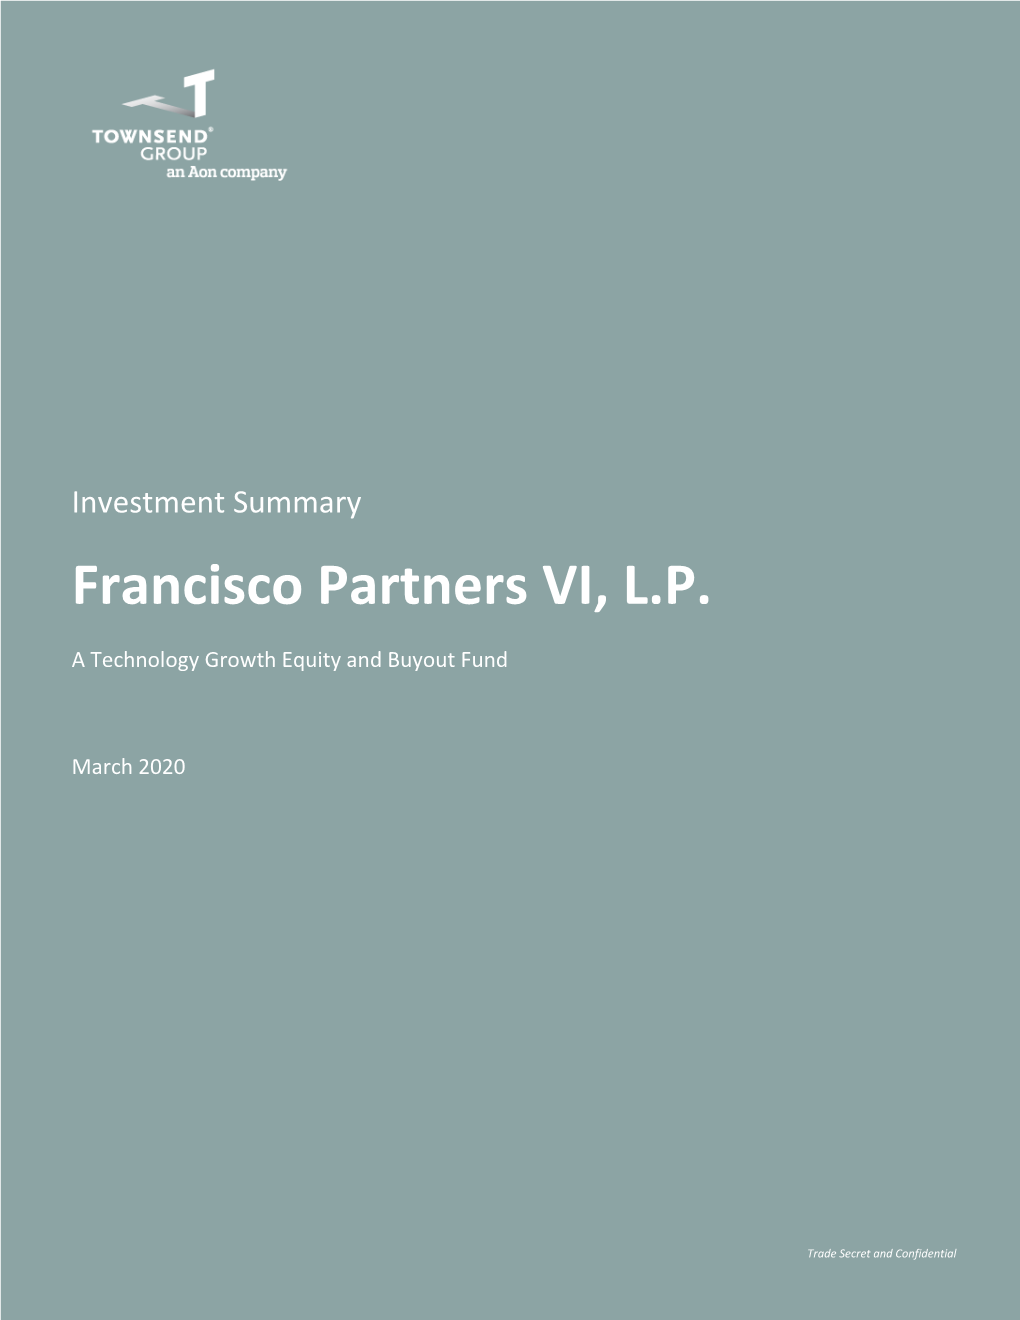 Francisco Partners VI, LP